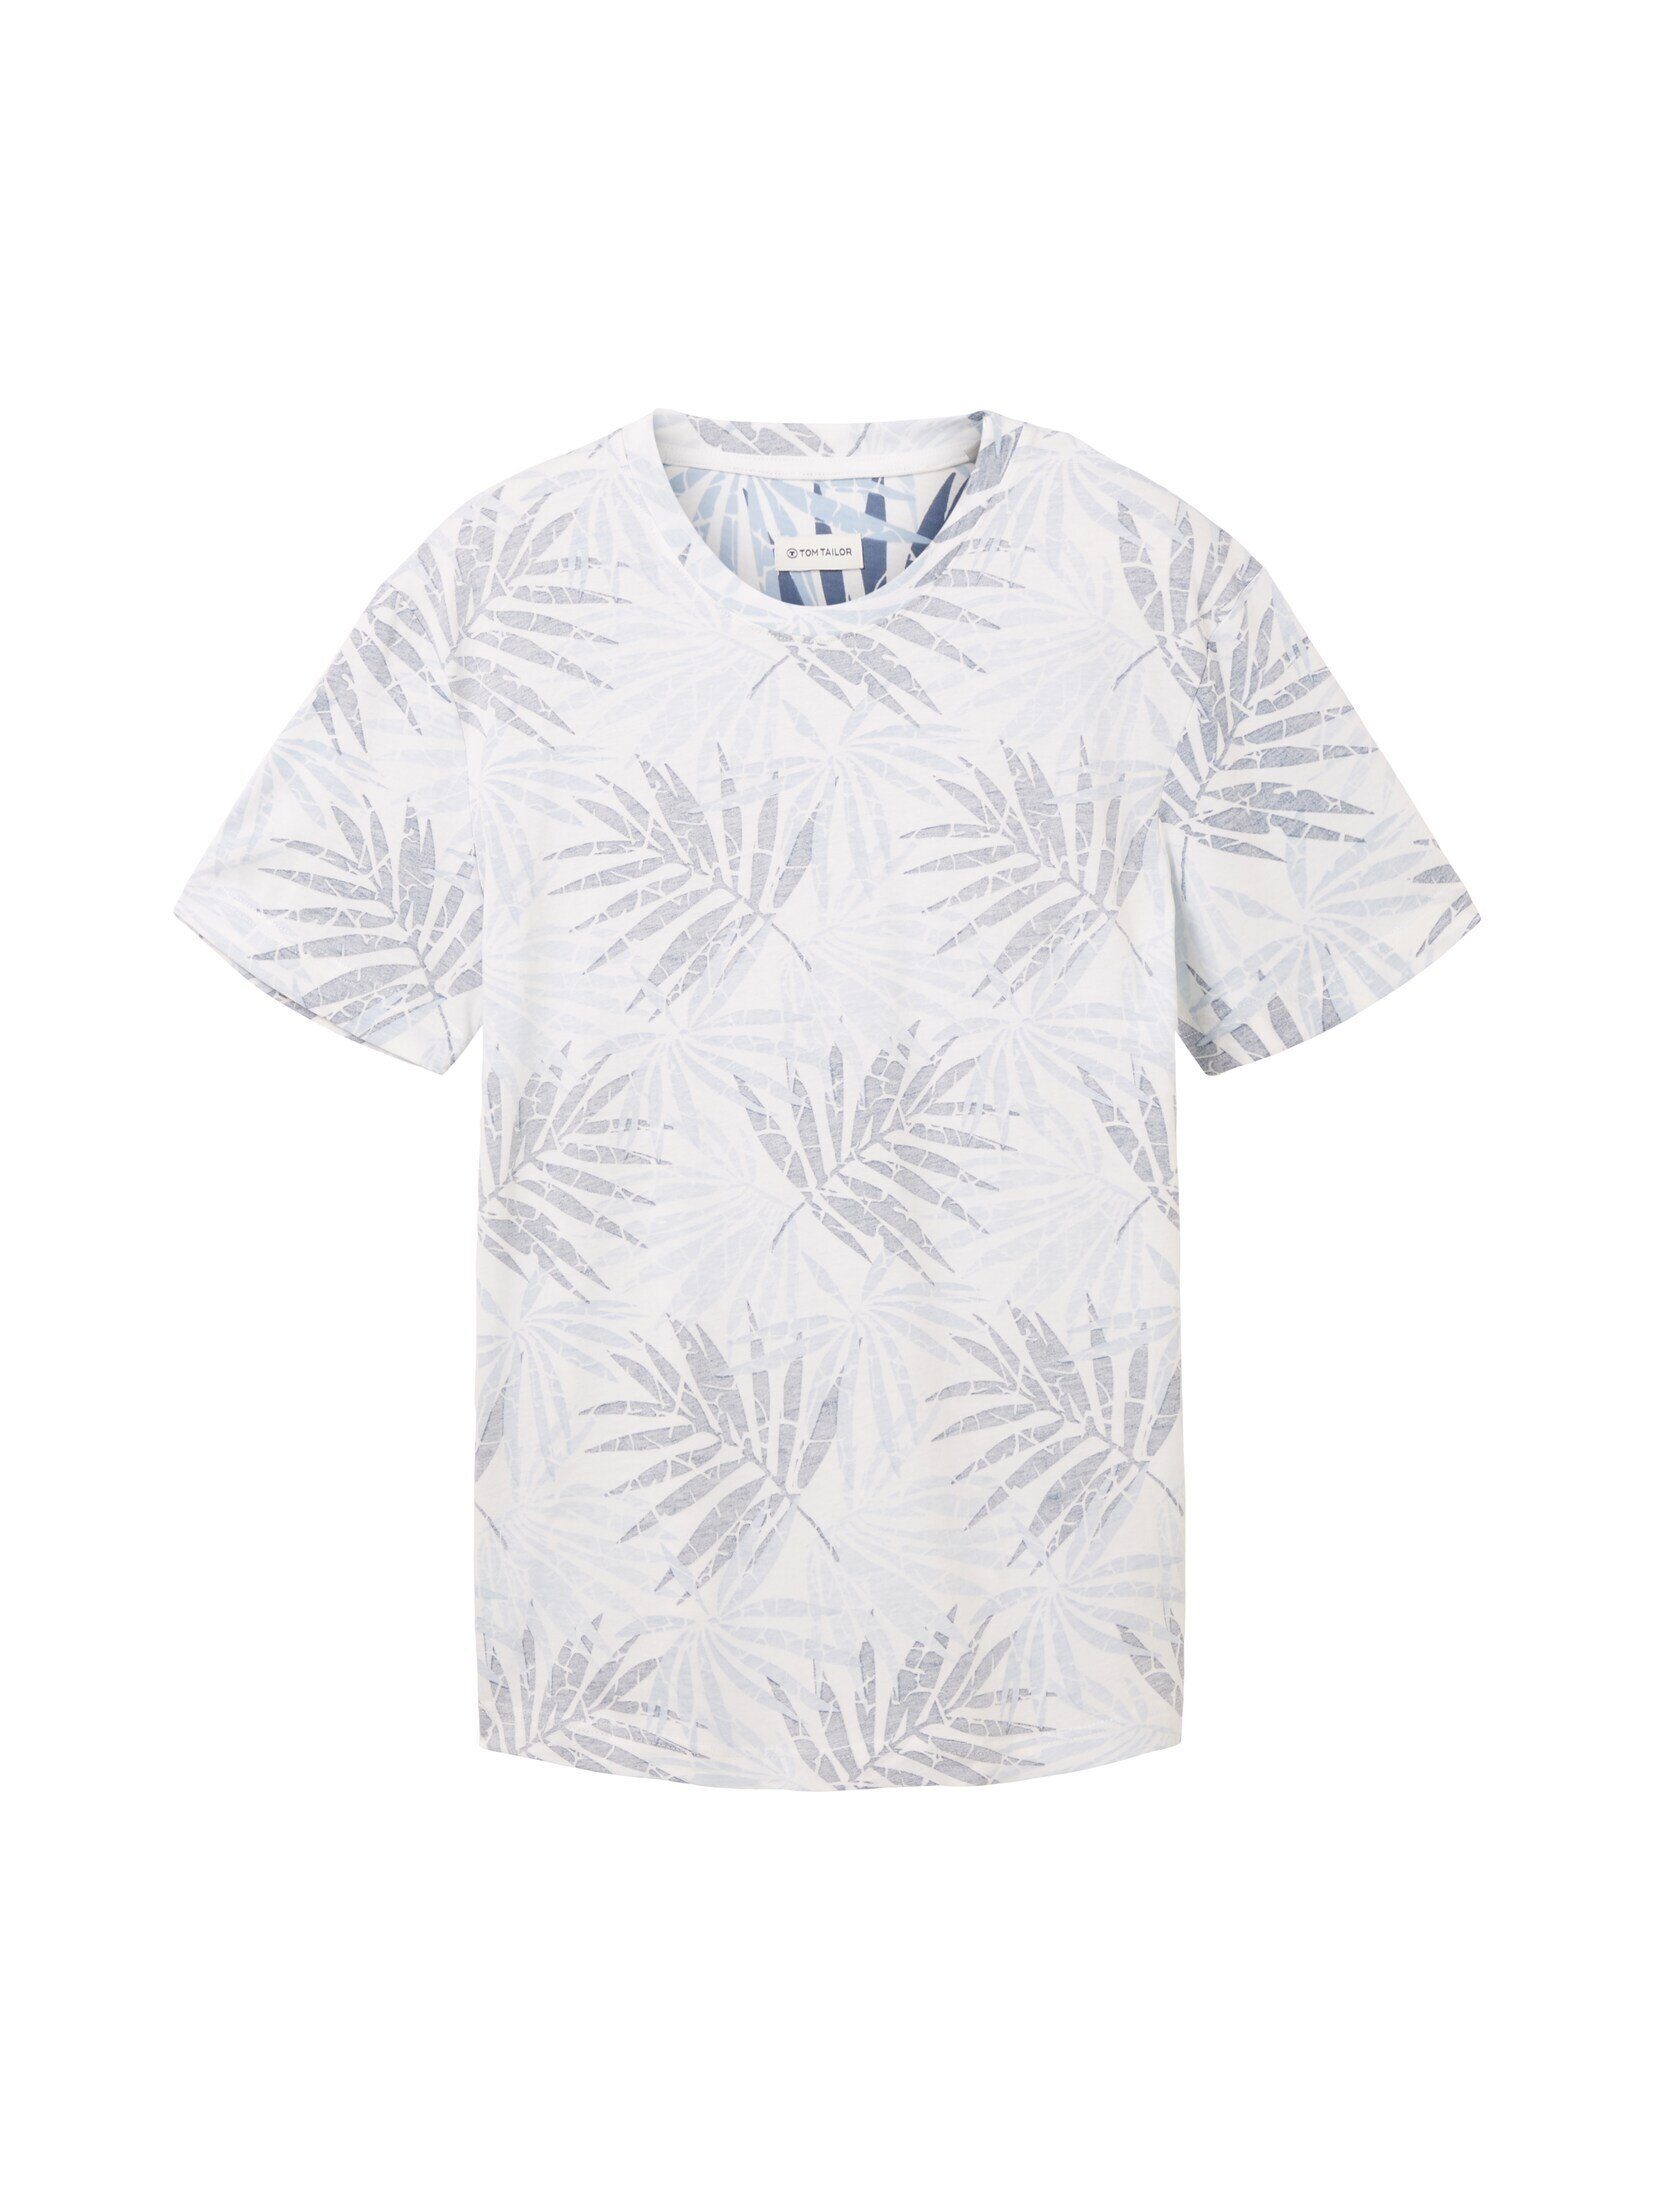 TOM TAILOR T-Shirt leaf blue design Allover-Print tonal light T-Shirt mit